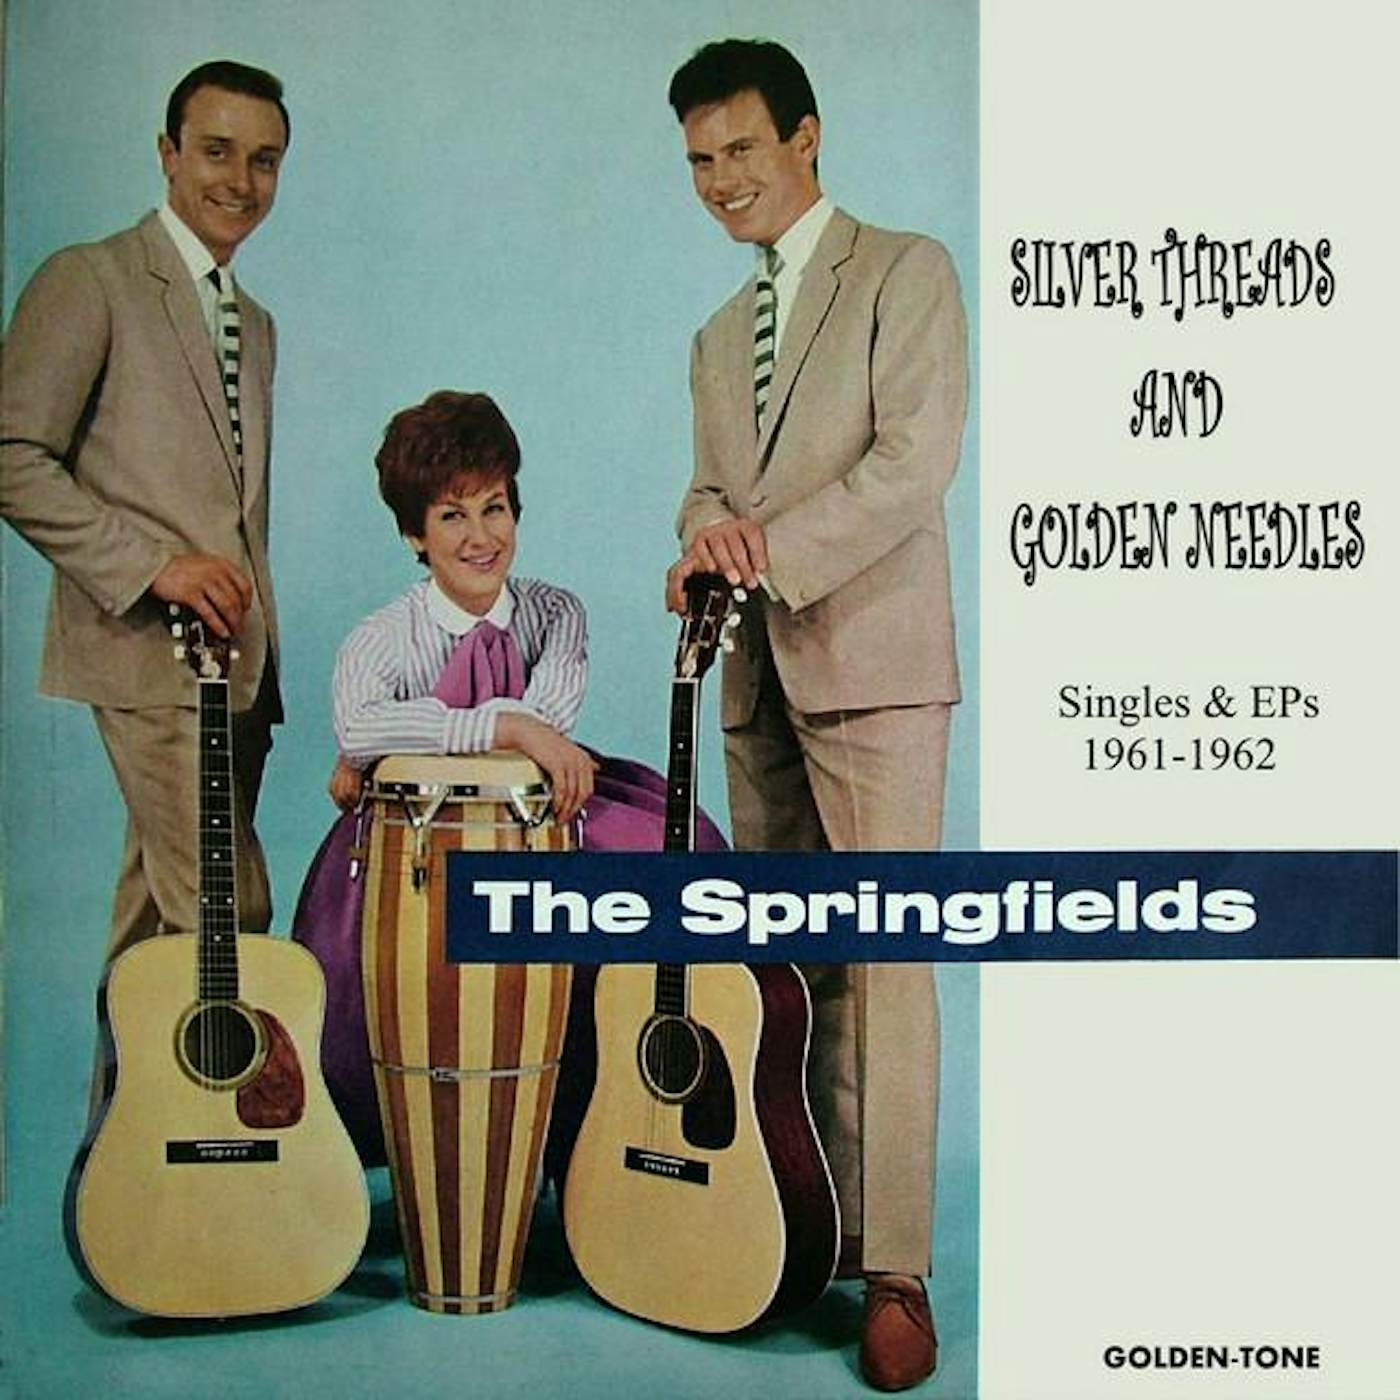 The Springfields